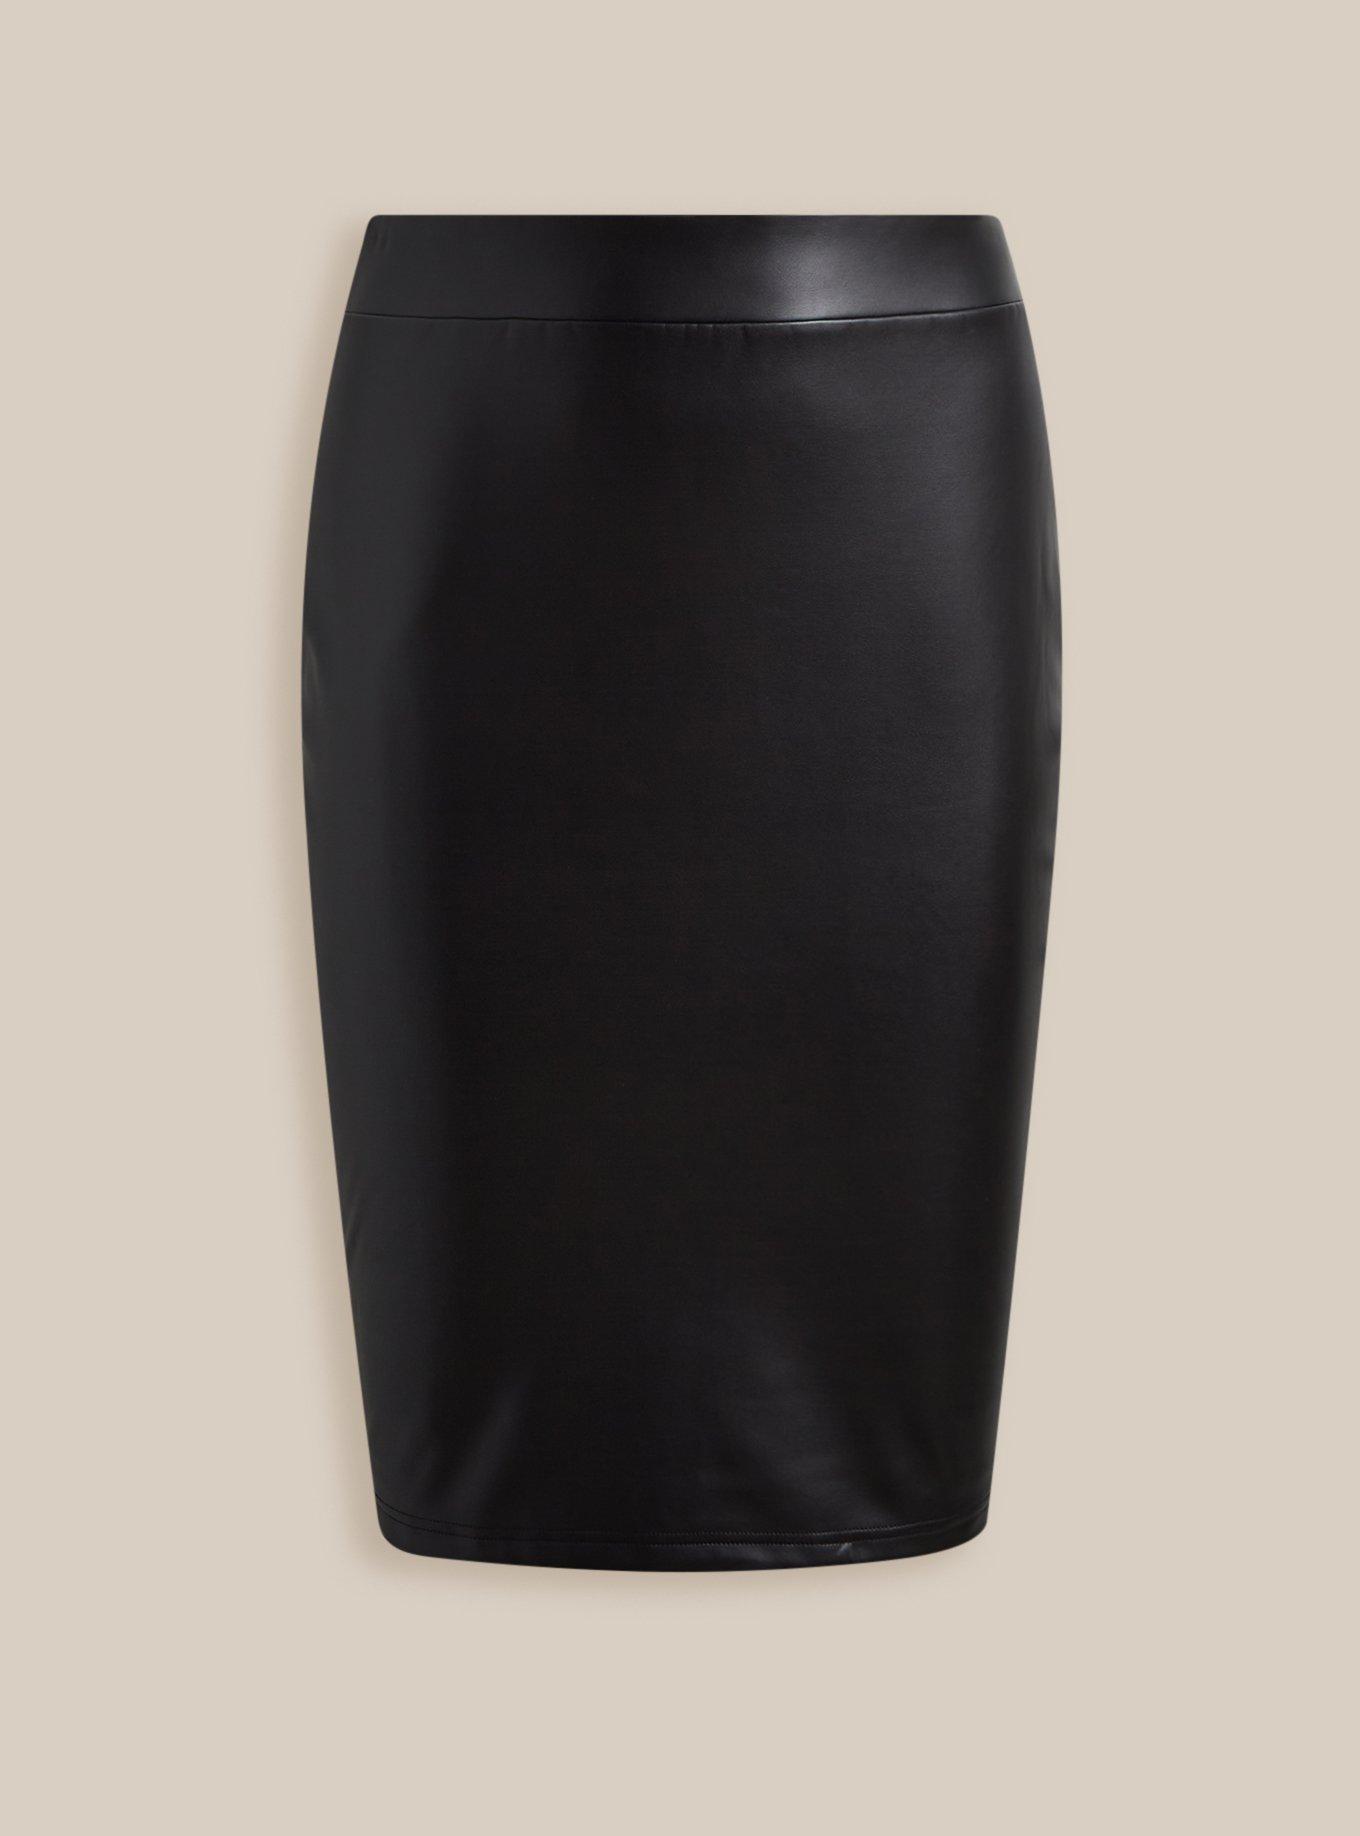 Torrid Slim Fix Pencil Skirt  Fitted pencil skirts, Pencil skirt